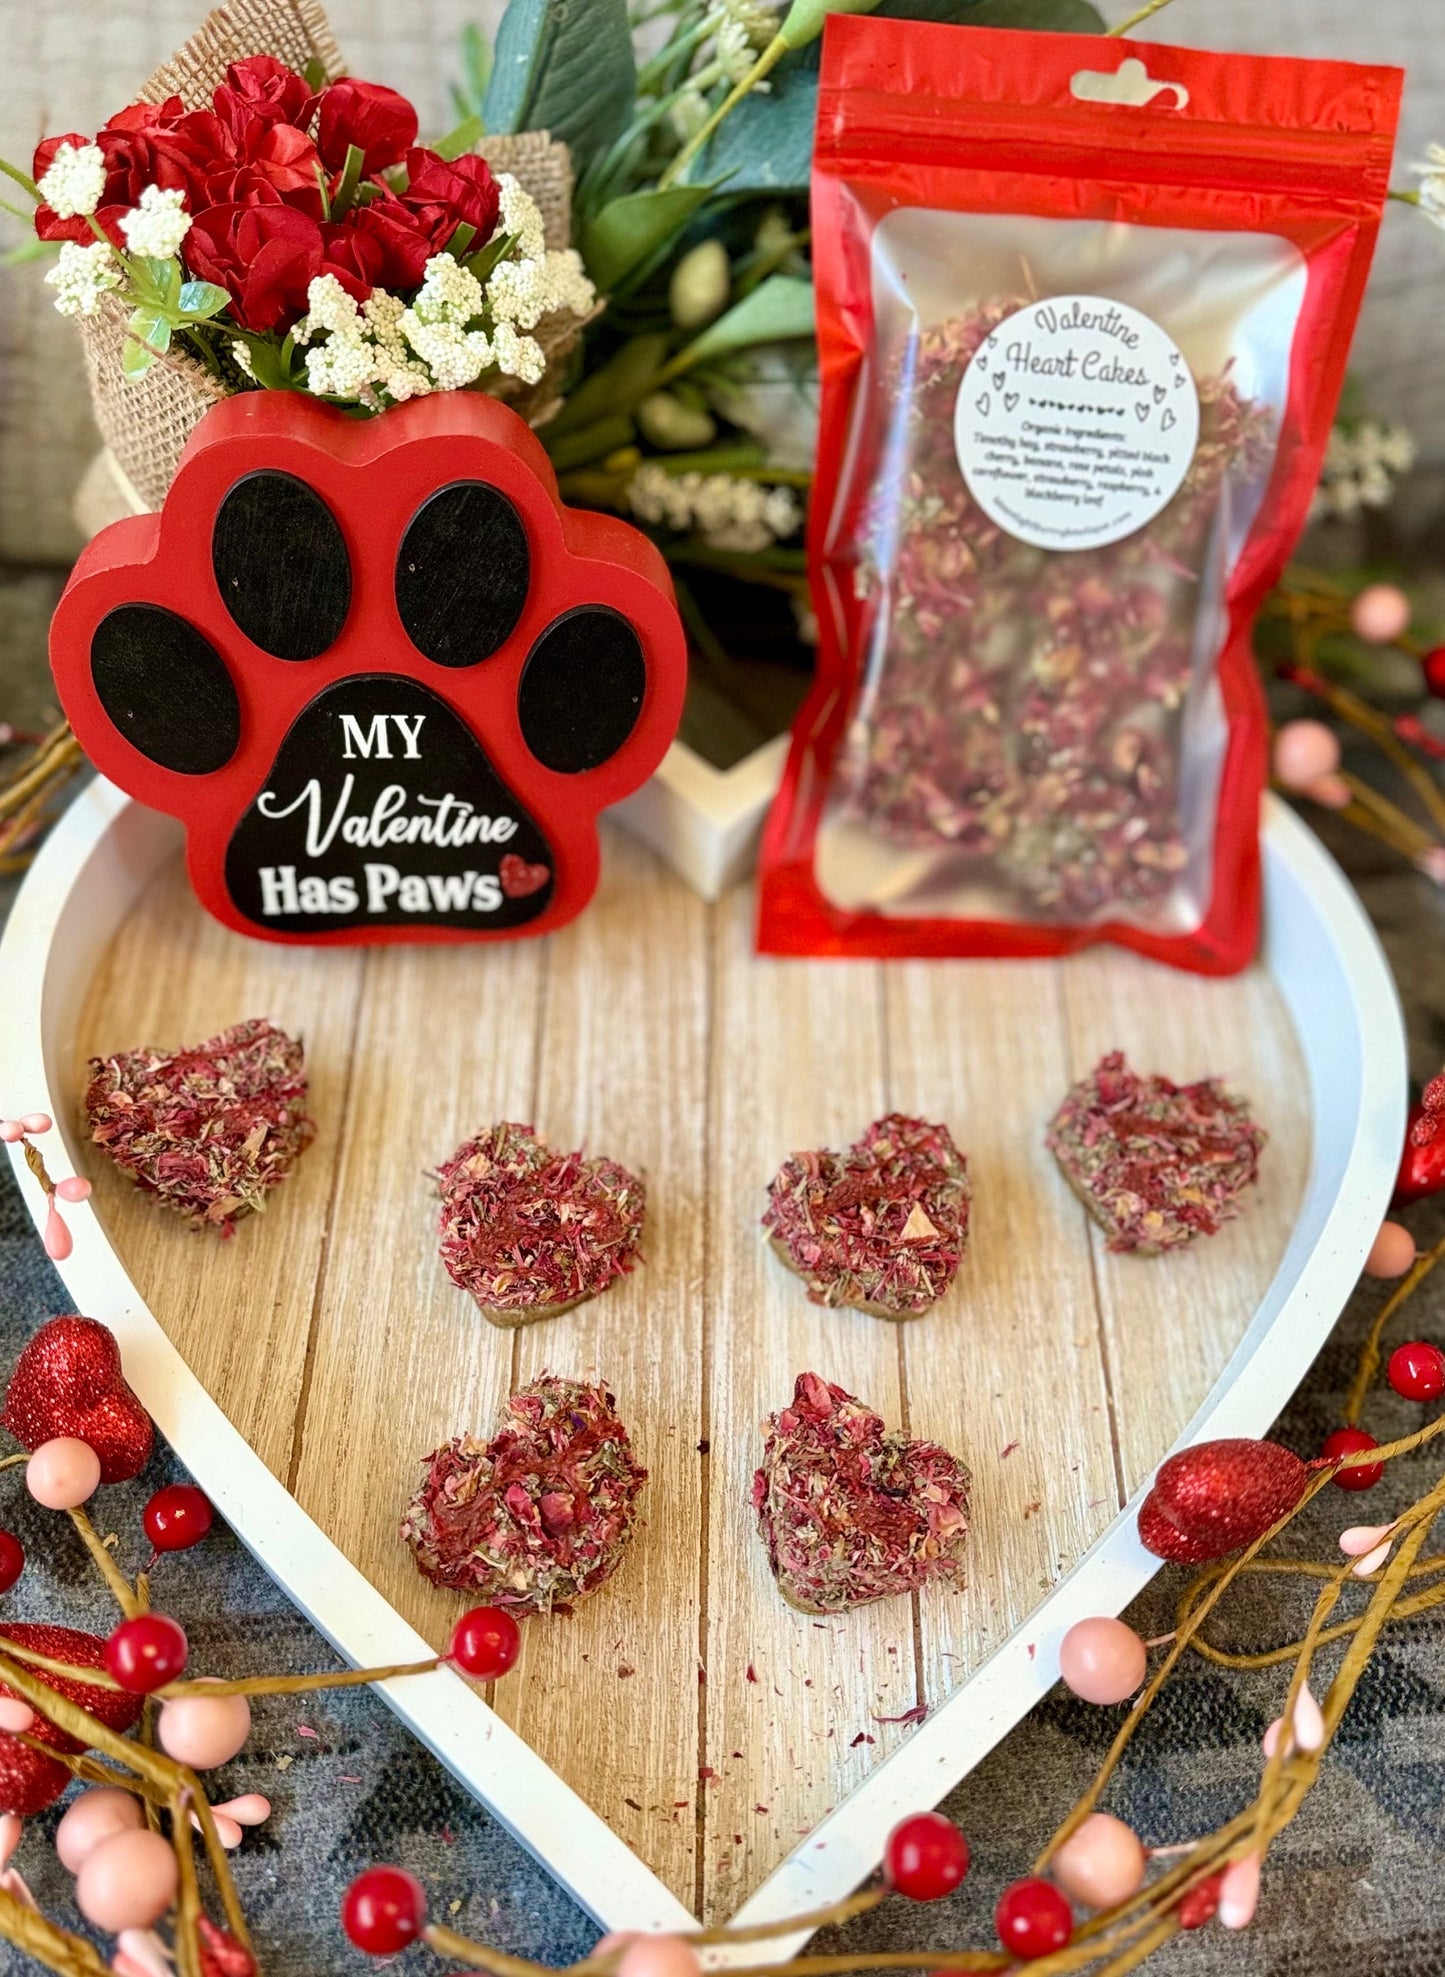 Valentine Heart Cakes | 100% OAT FREE Treats for Rabbits, Guinea Pigs, Chinchillas, & Small animals, Natural, Healthy, Organic Bunny Treats